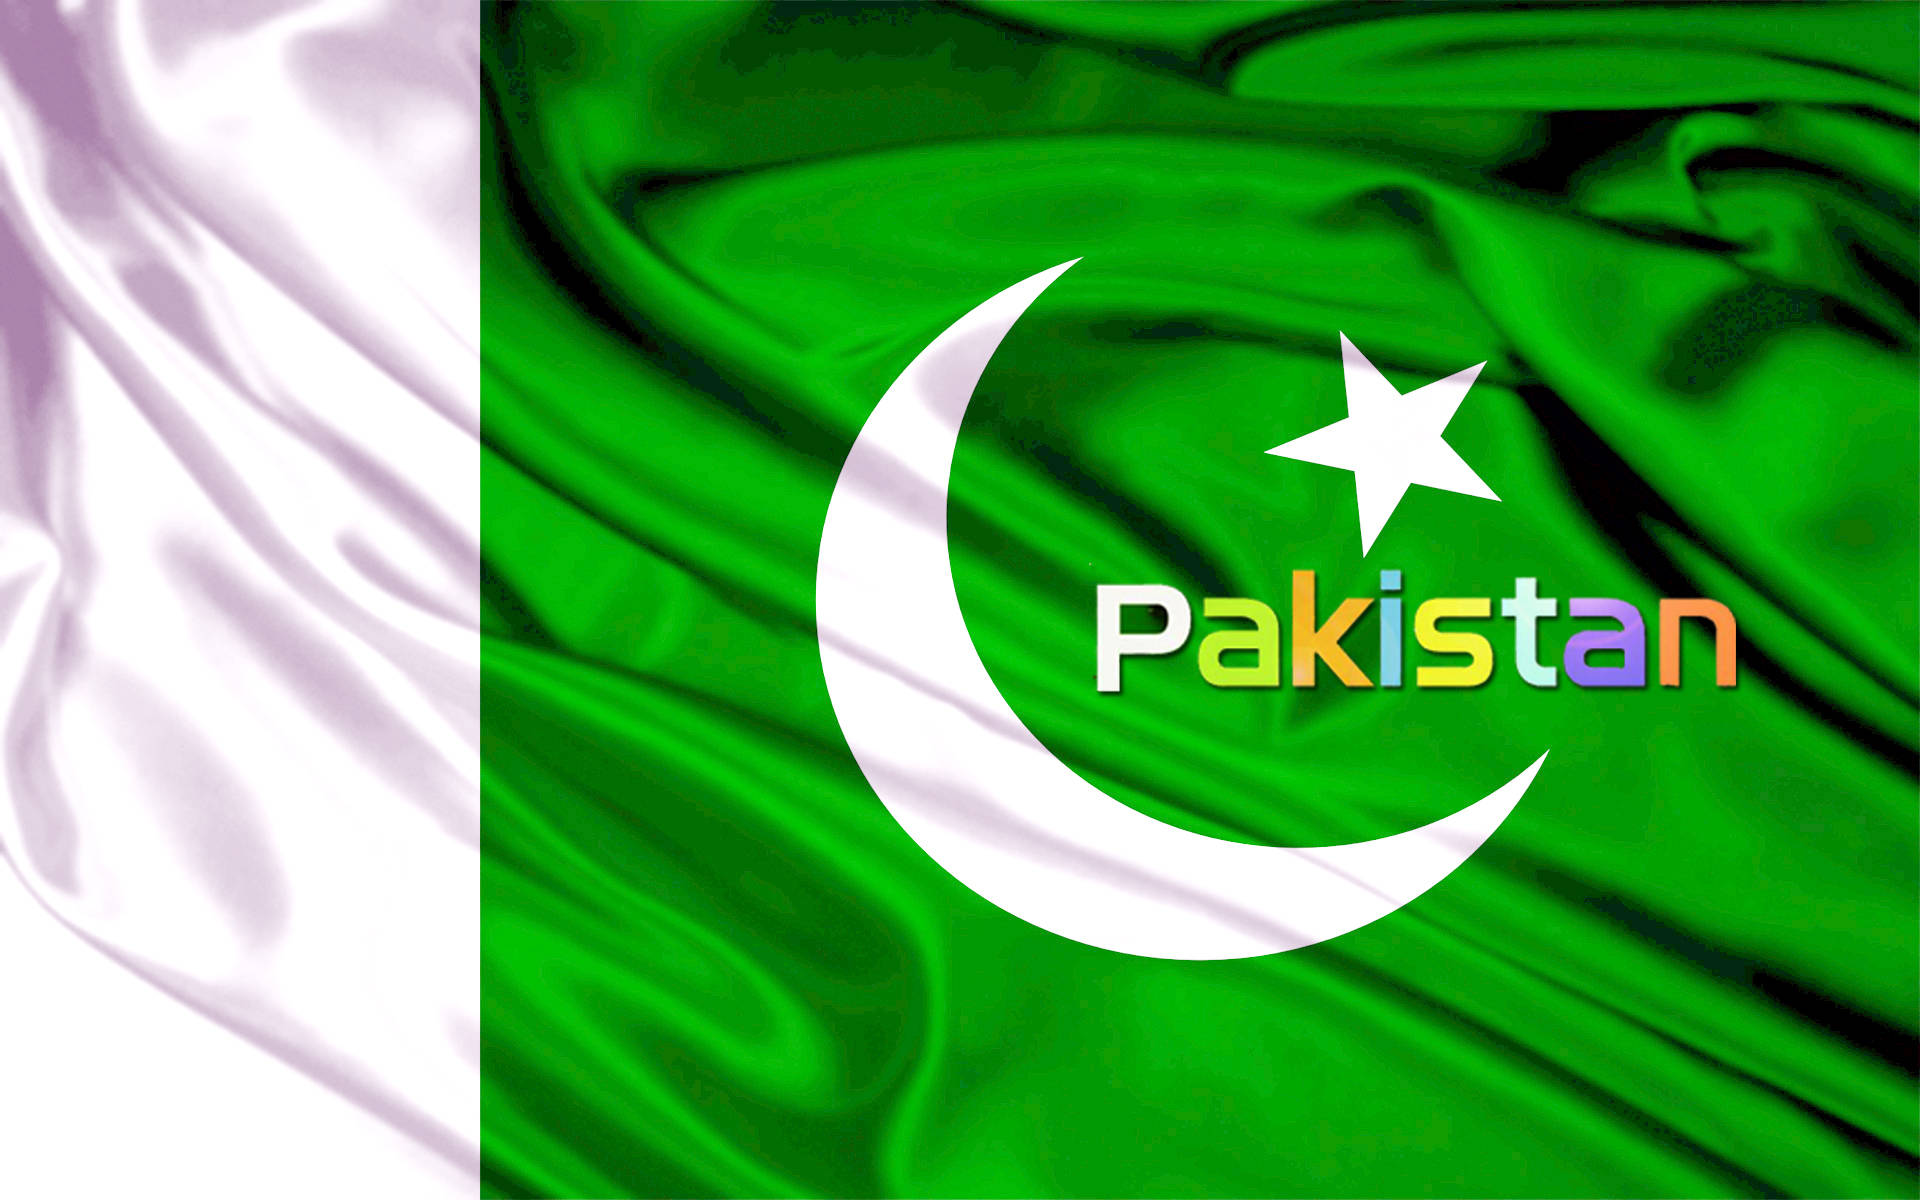 Pakistan Flying Flag Post In Blue Sky Background HD Pakistan Flag Wallpapers   HD Wallpapers  ID 83013